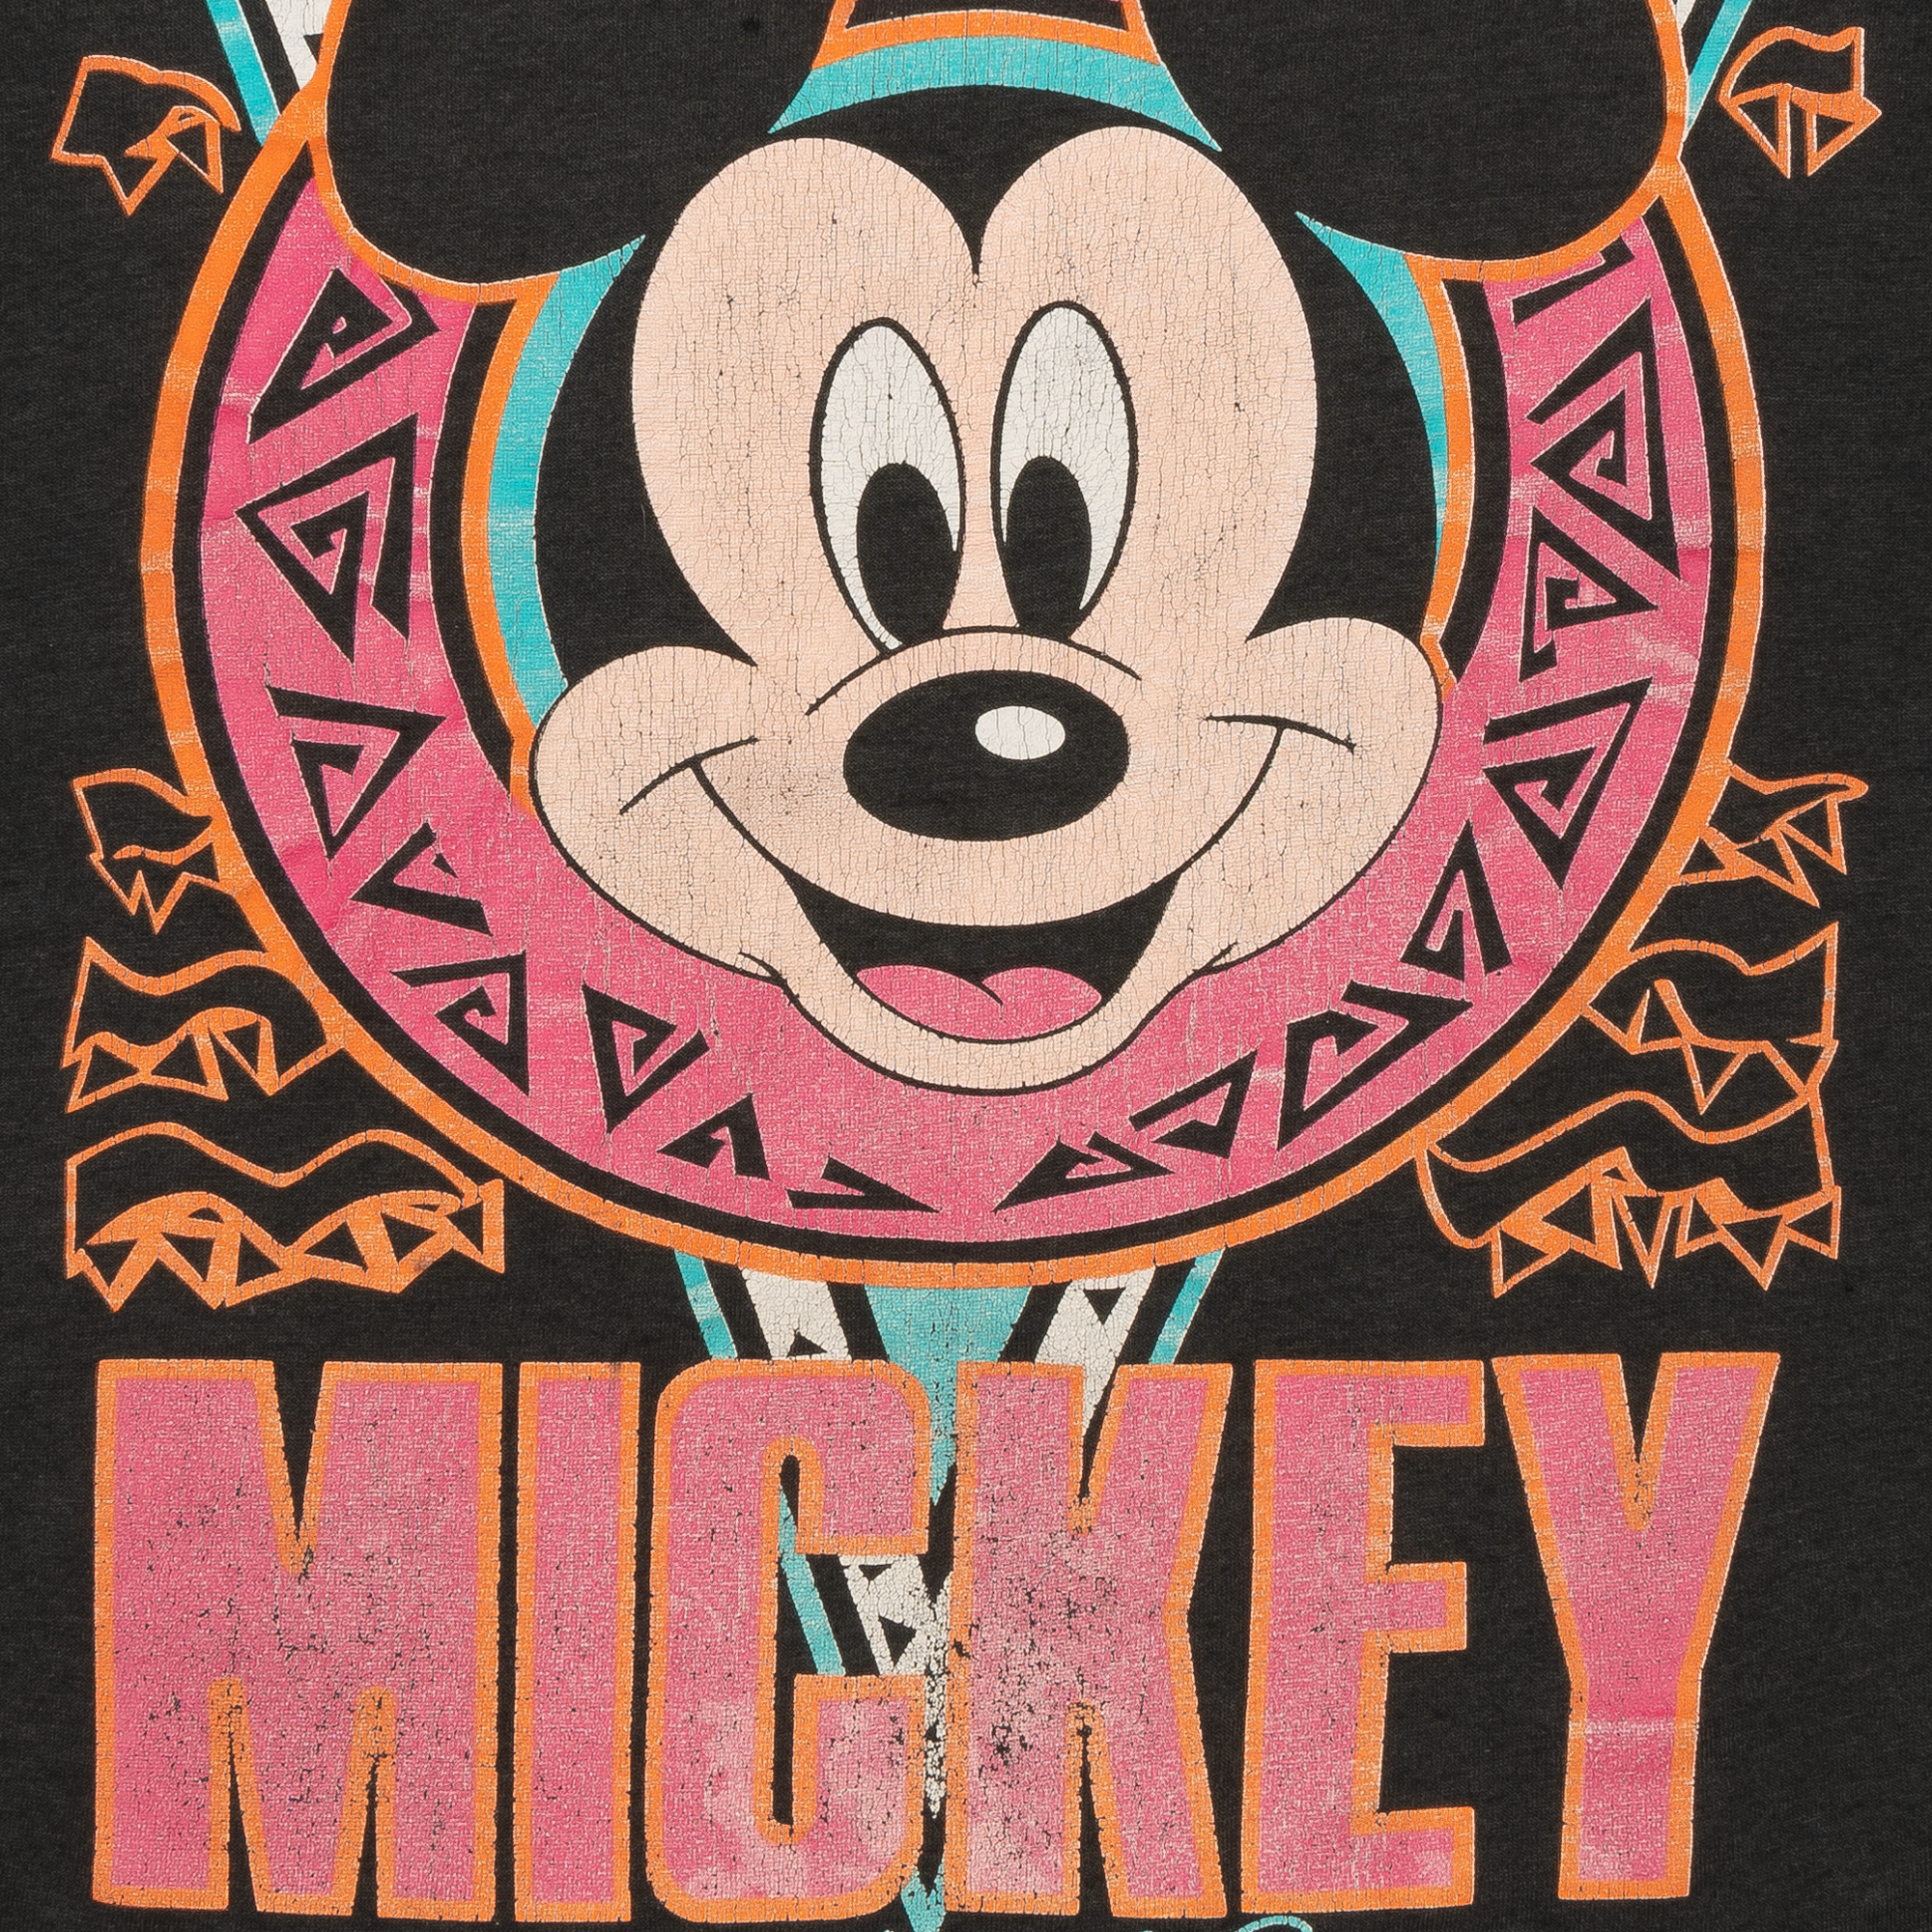 Mickey Mouse Disney Faded Tee Black-PLUS